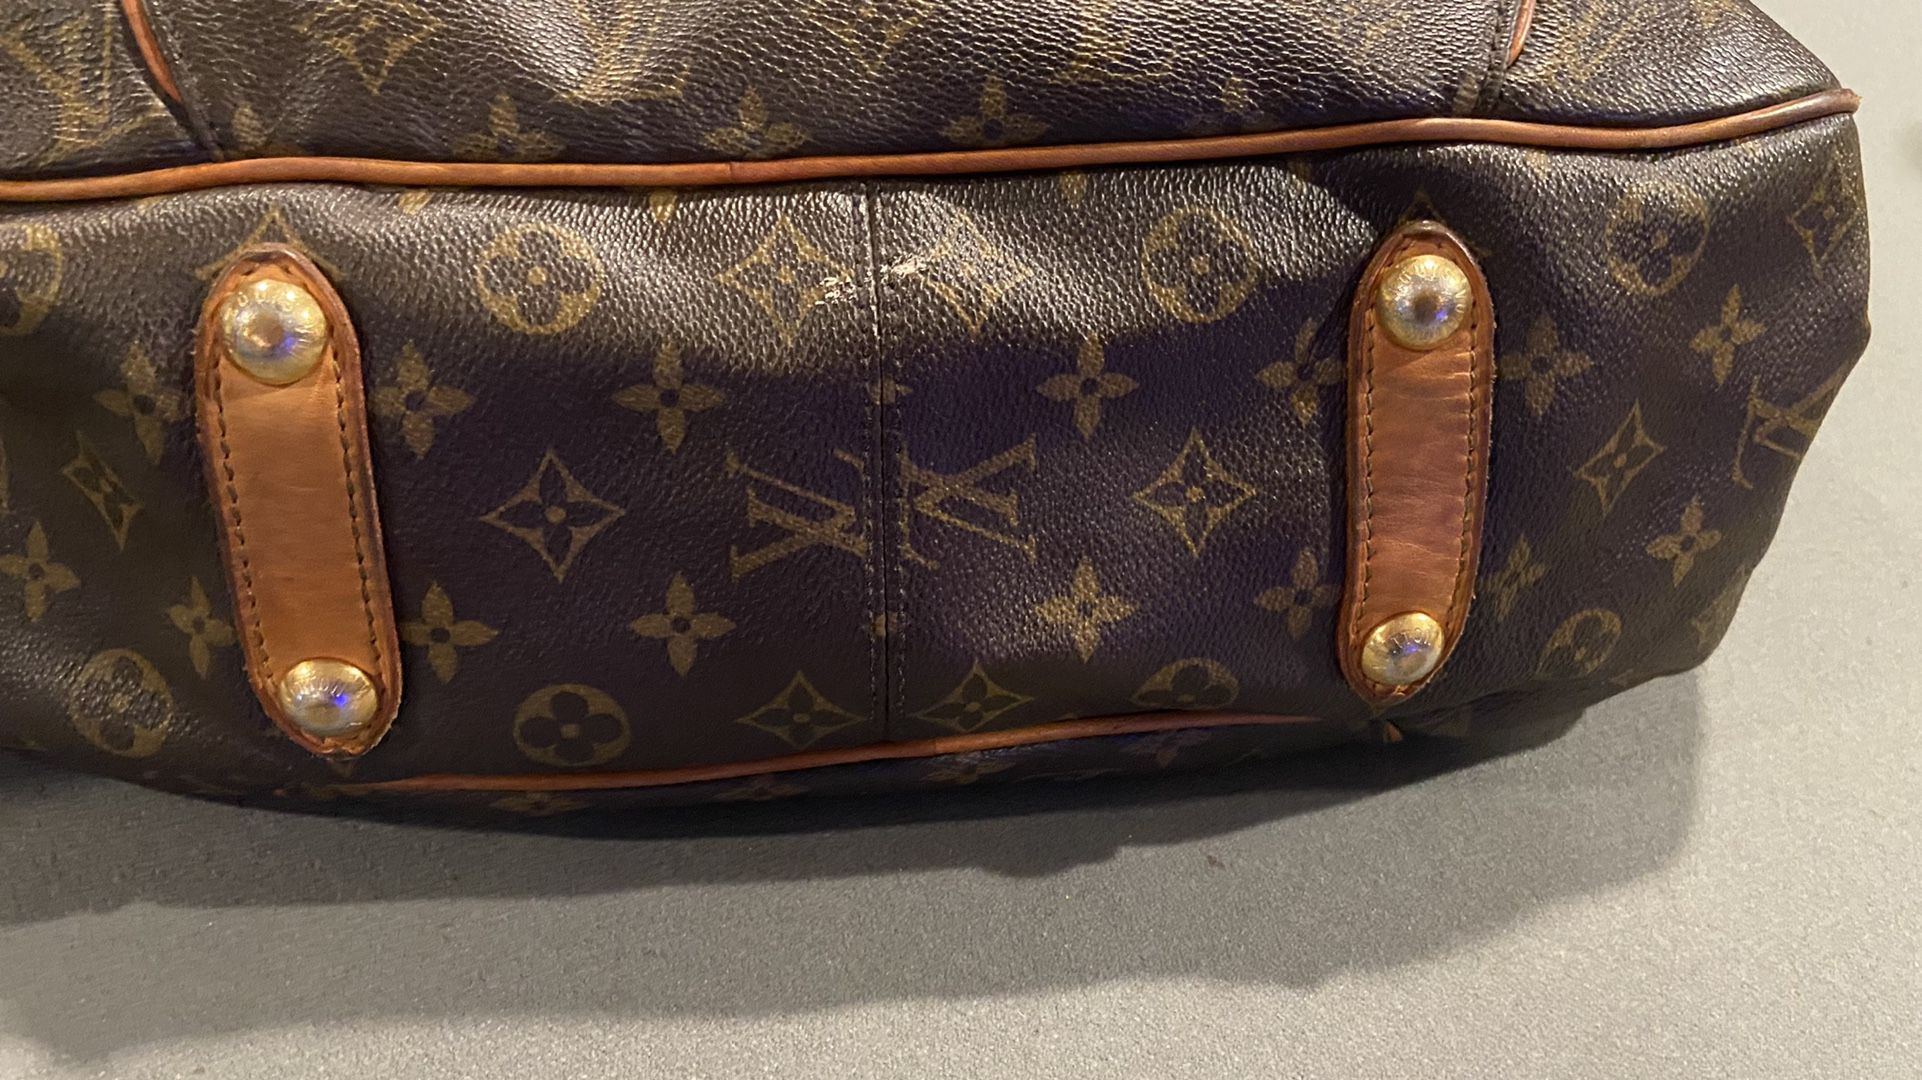 Louis Vuitton Authentic Galleria Bag for Sale in Anaheim, CA - OfferUp